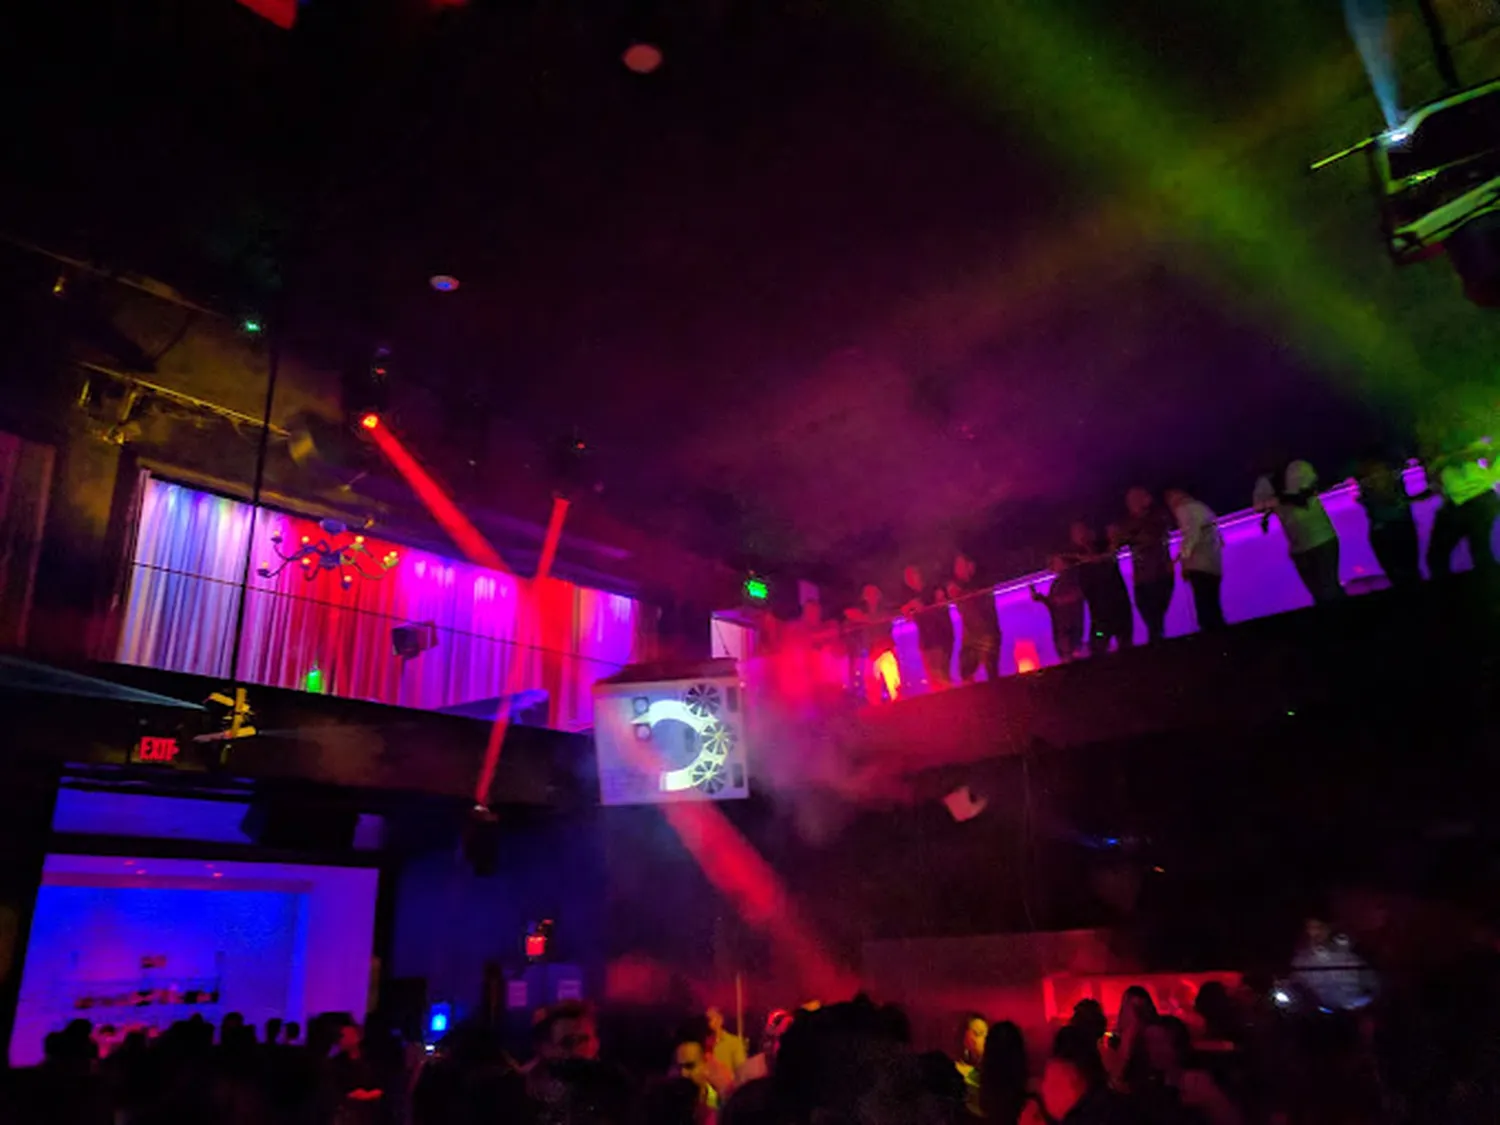 Pura nightclub San Francisco